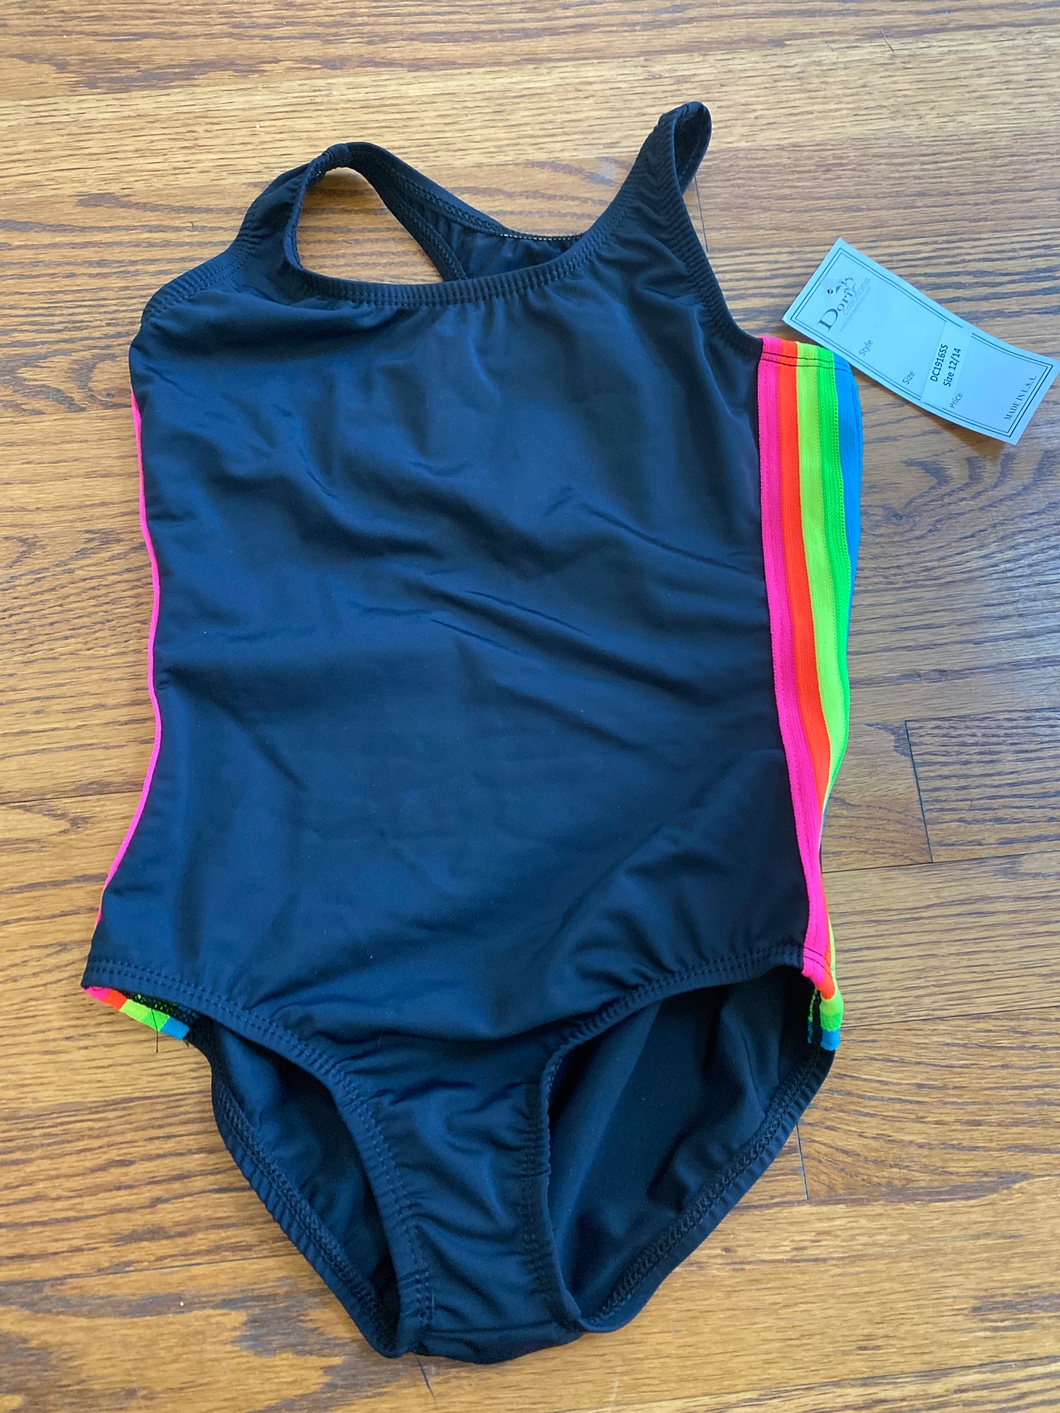 Dori Creations Neon Bathing Suit